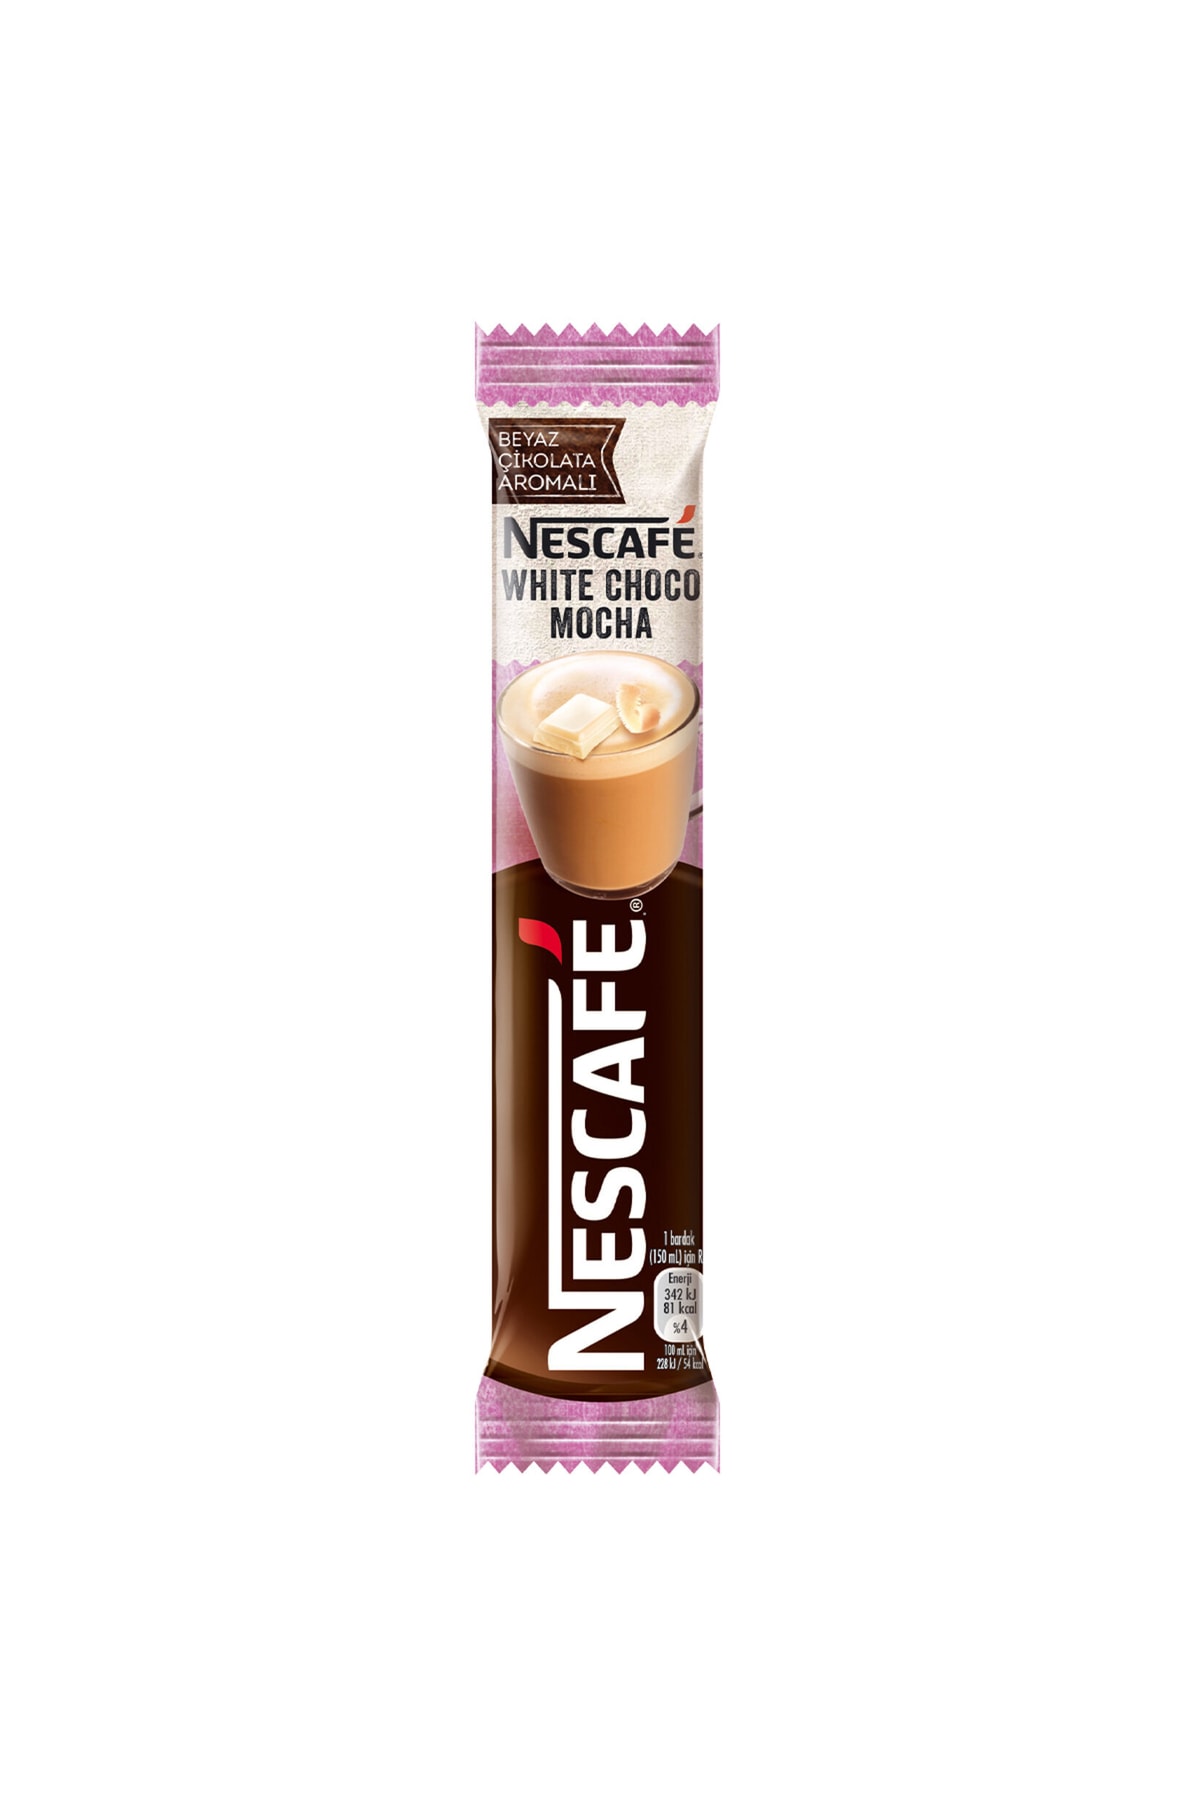 Nescafe White Choco Mocha Beyaz Çikolata Aromalı 19,2 G 10 Adet